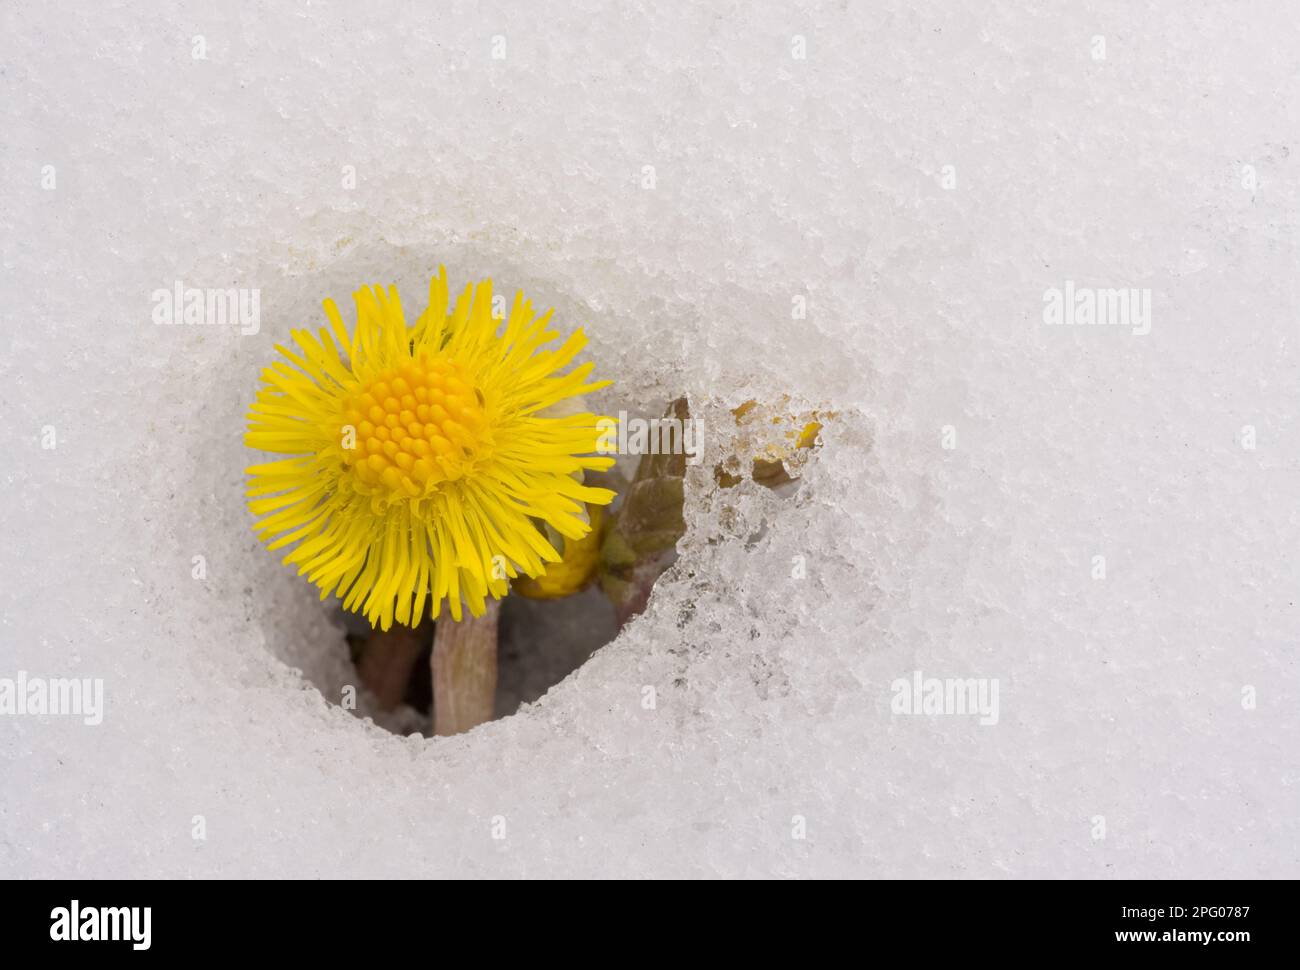 Coltsfoot (Tussilago farfara) flowering, appearing through fresh snow, Swiss Alps, Switzerland Stock Photo